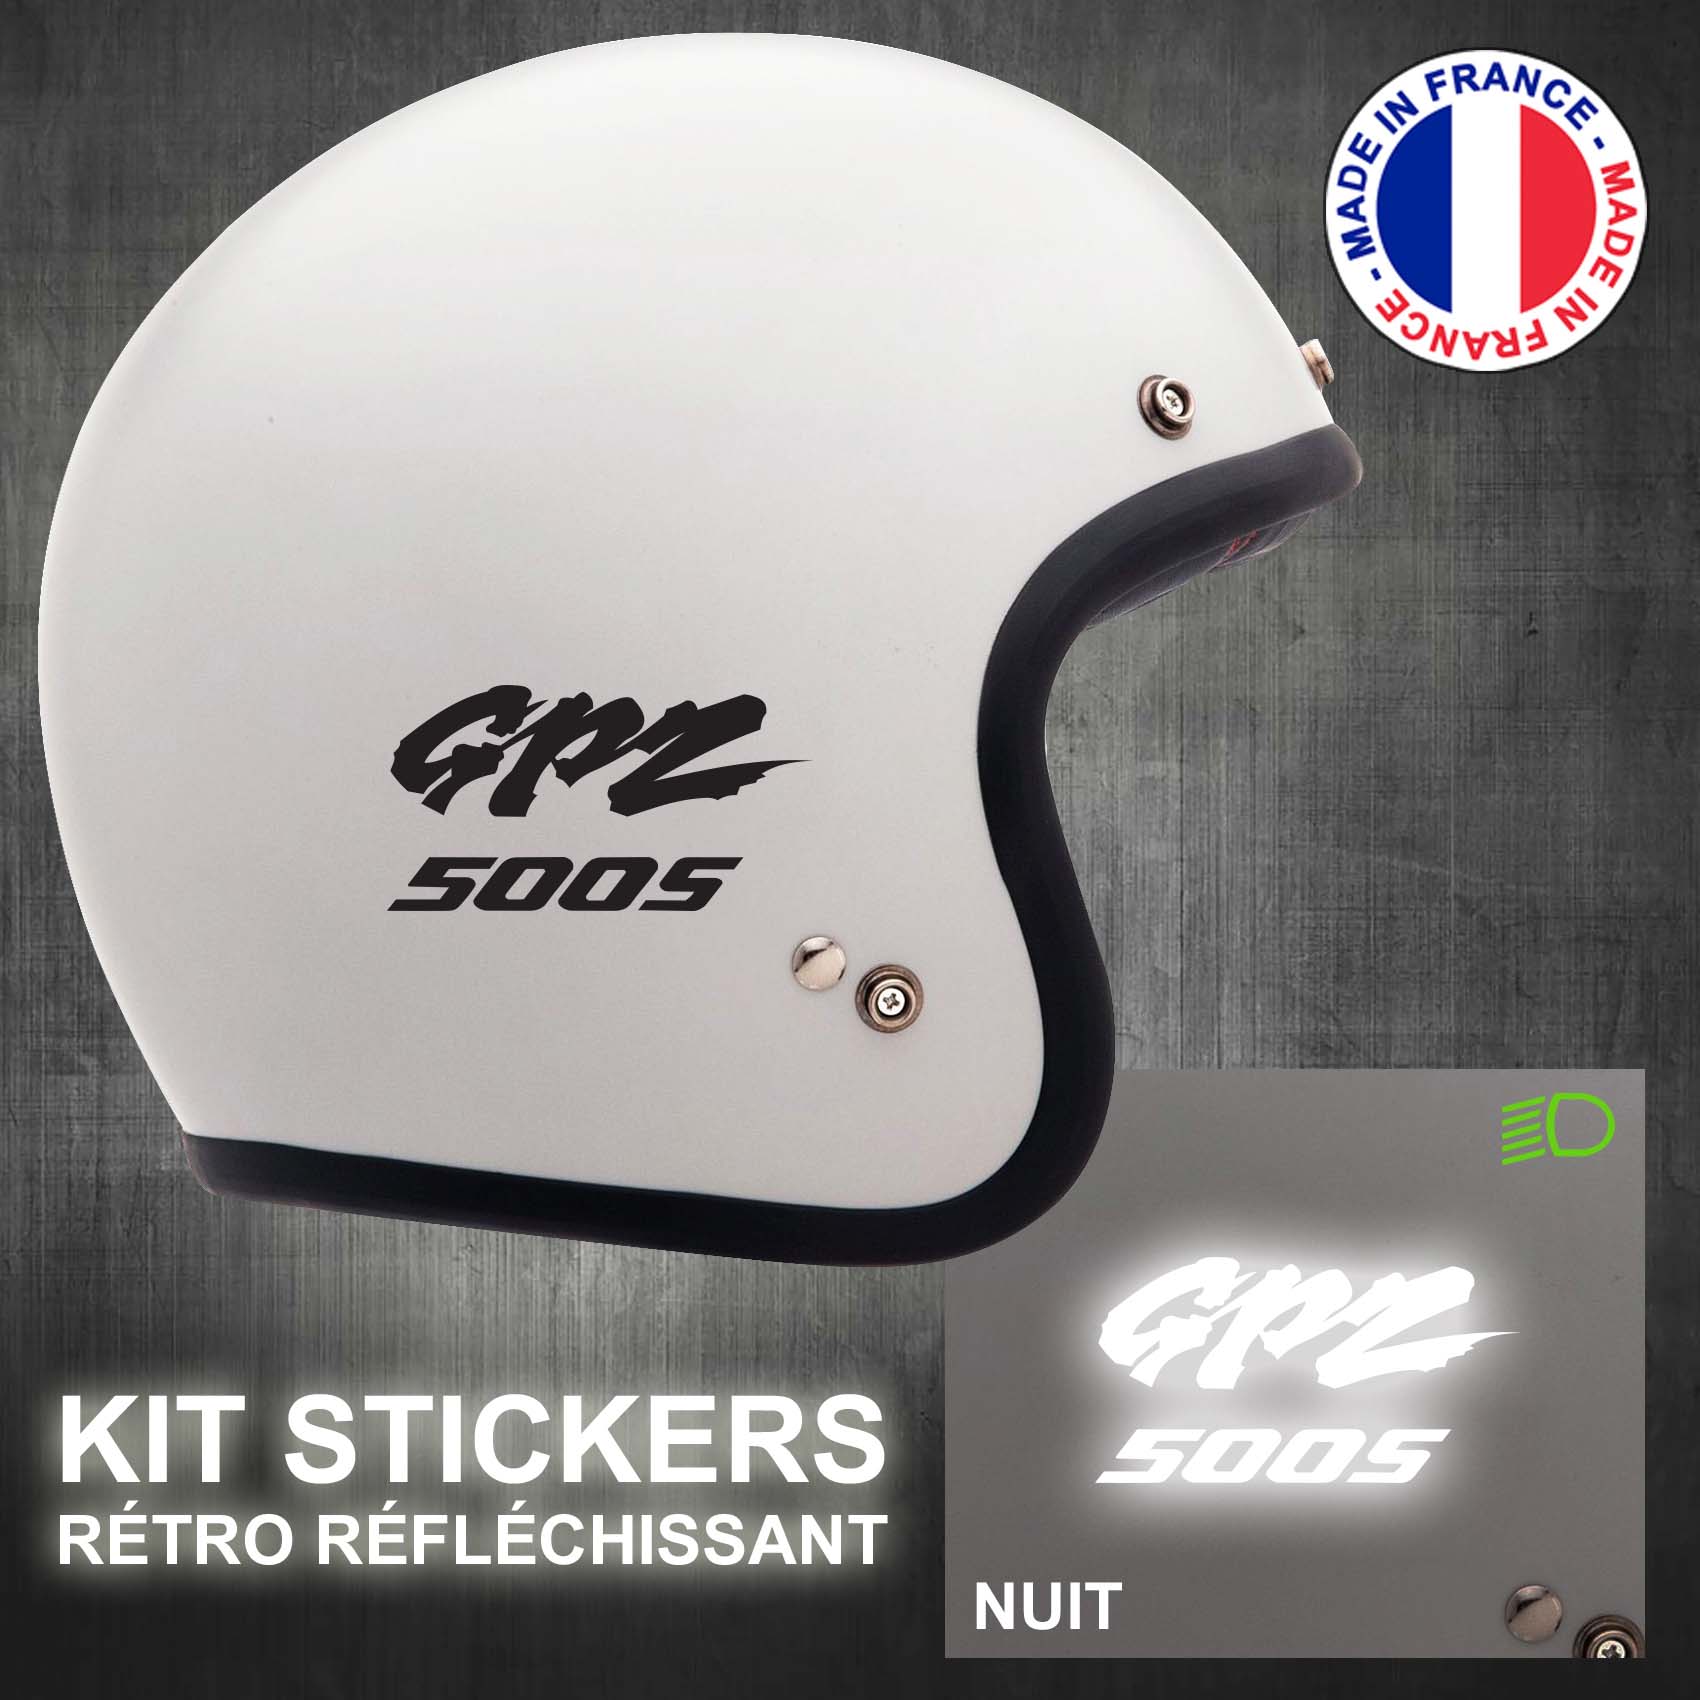 stickers-casque-moto-gpz-500s-kawasaki-ref2-retro-reflechissant-autocollant-moto-velo-tuning-racing-route-sticker-casques-adhesif-nuit-securite-decals-personnalise-personnalisable-min